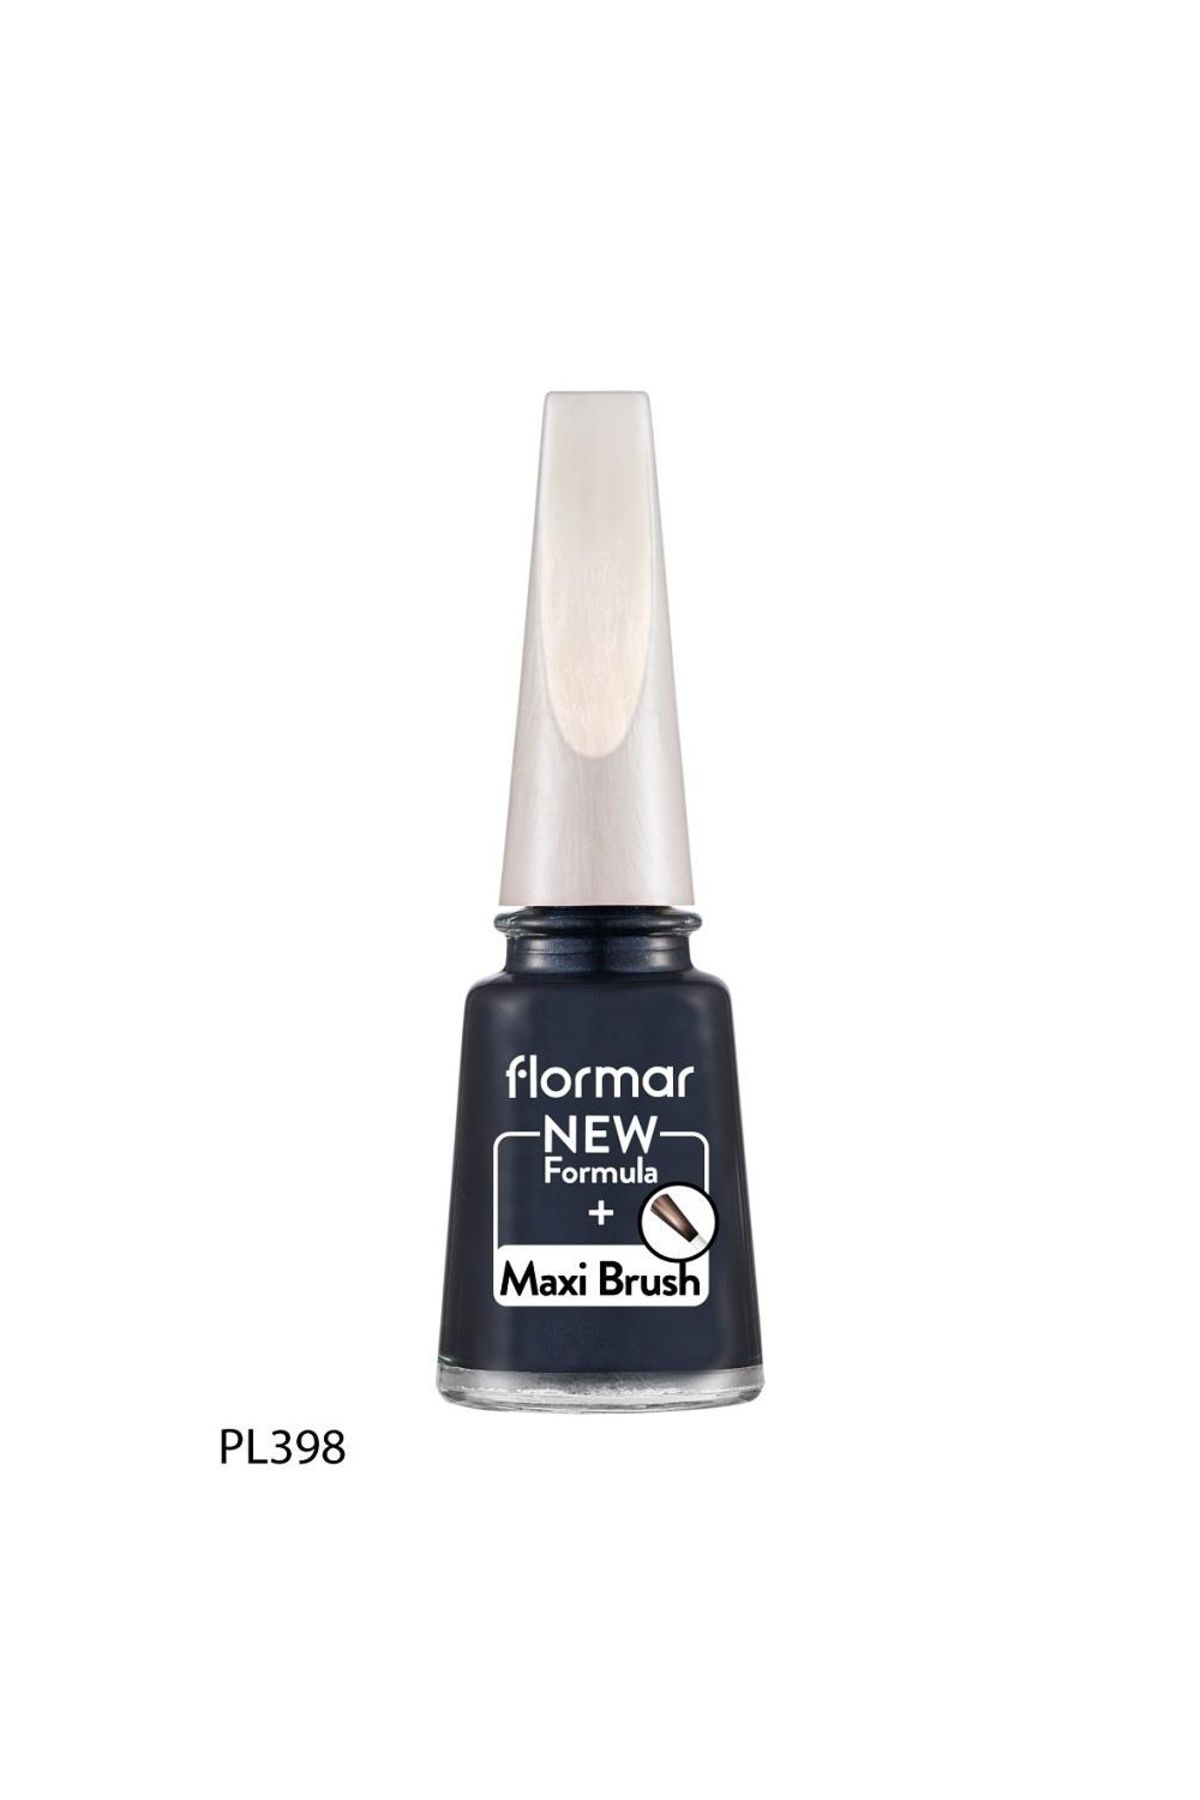 Flormar Oje Maxi Brush Pearly Pl398 Blue Black New